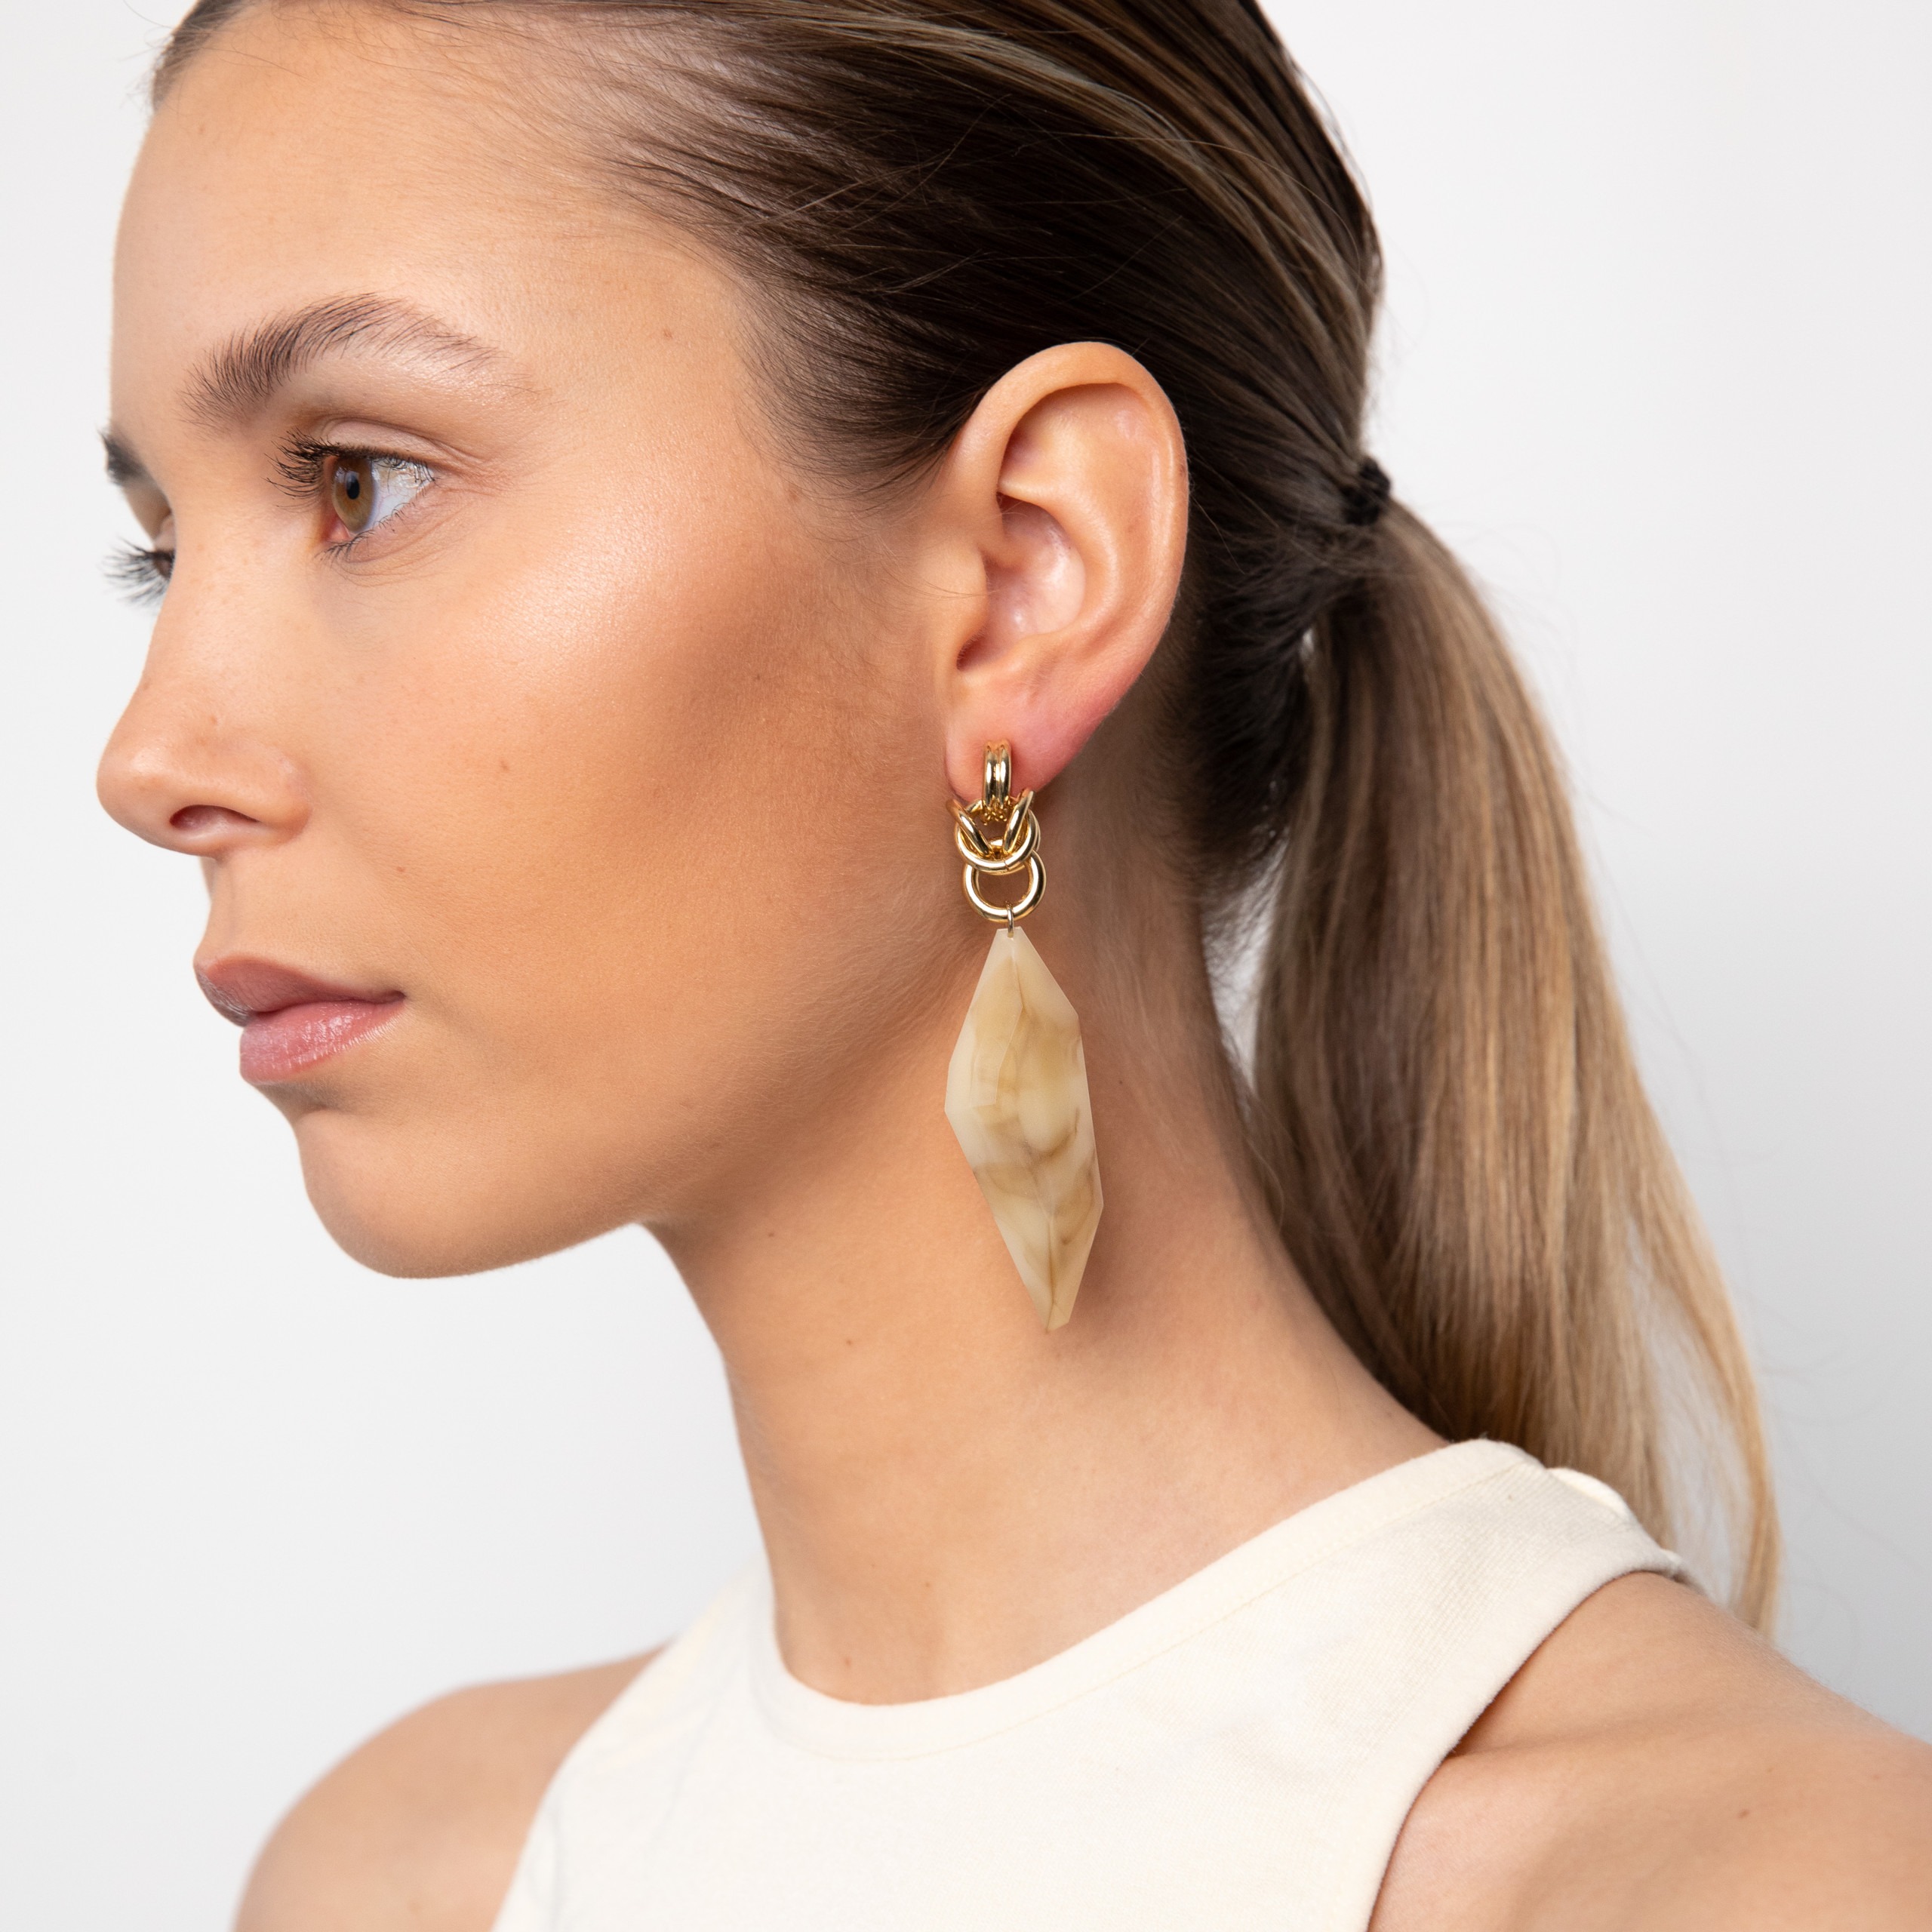 Vintage long beige stone earrings